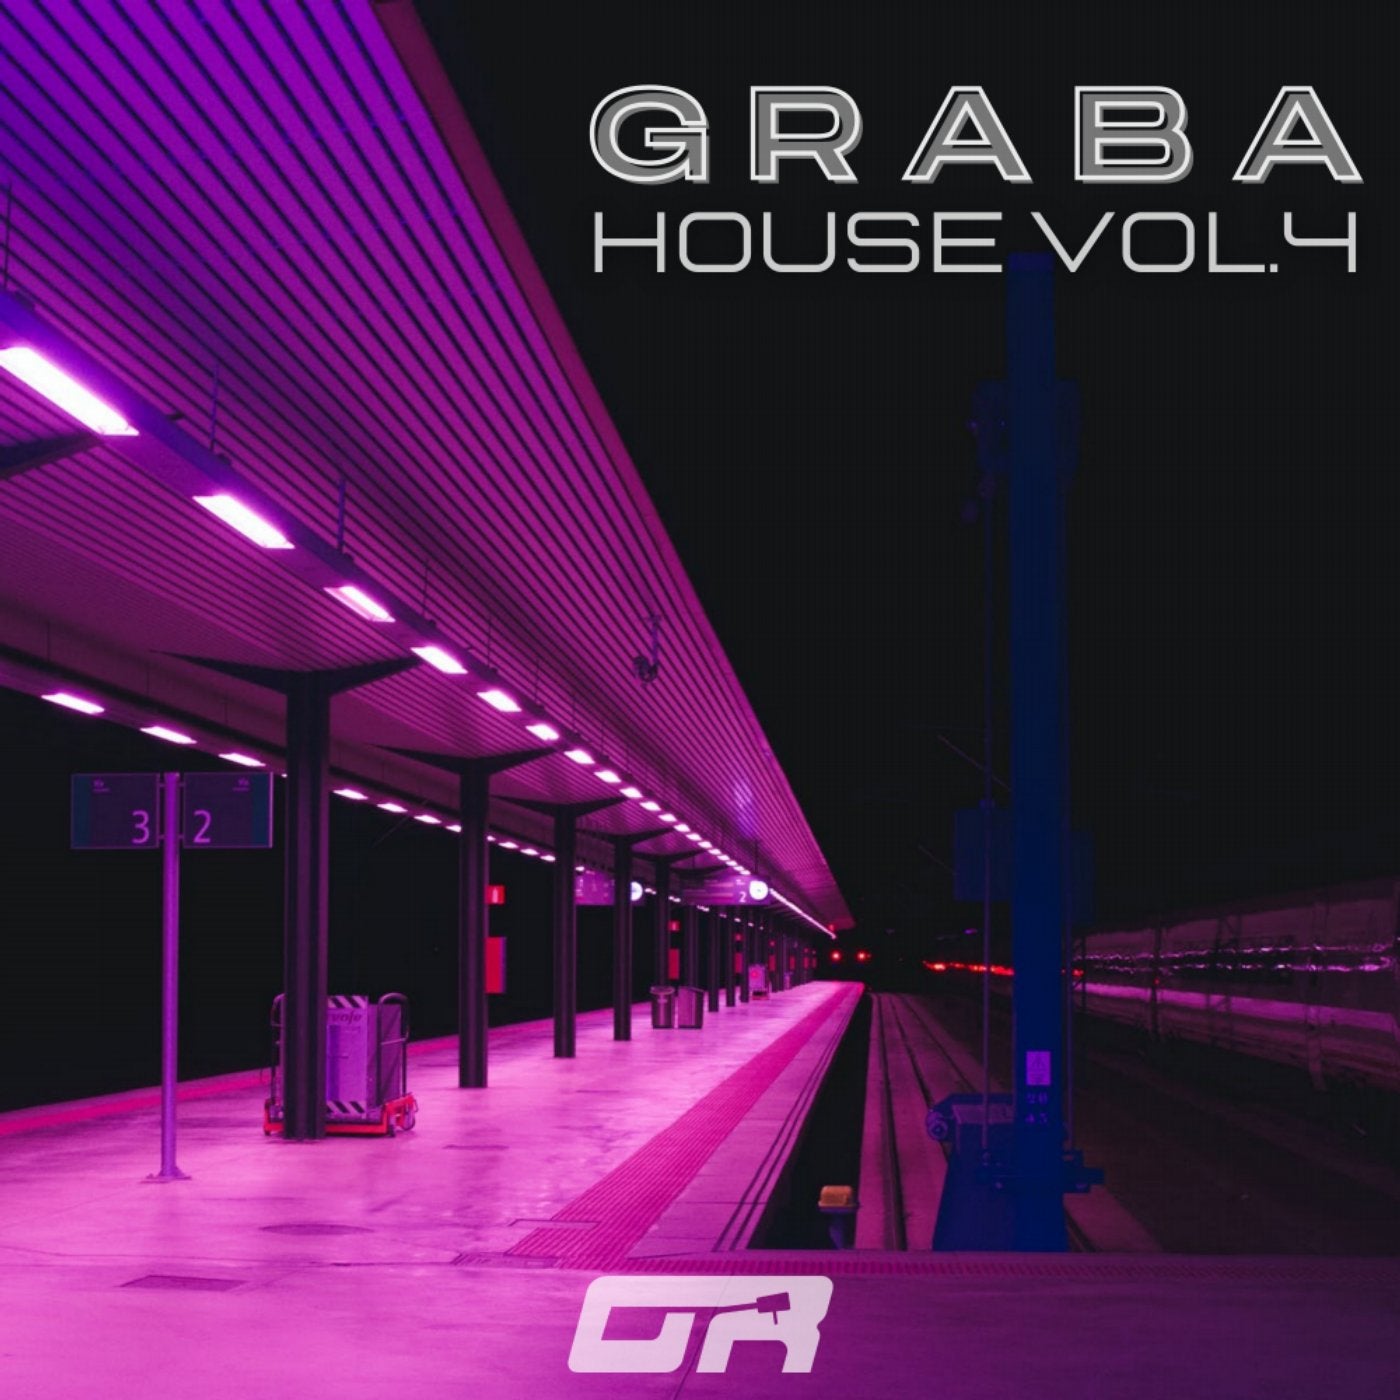 Graba House Vol.4